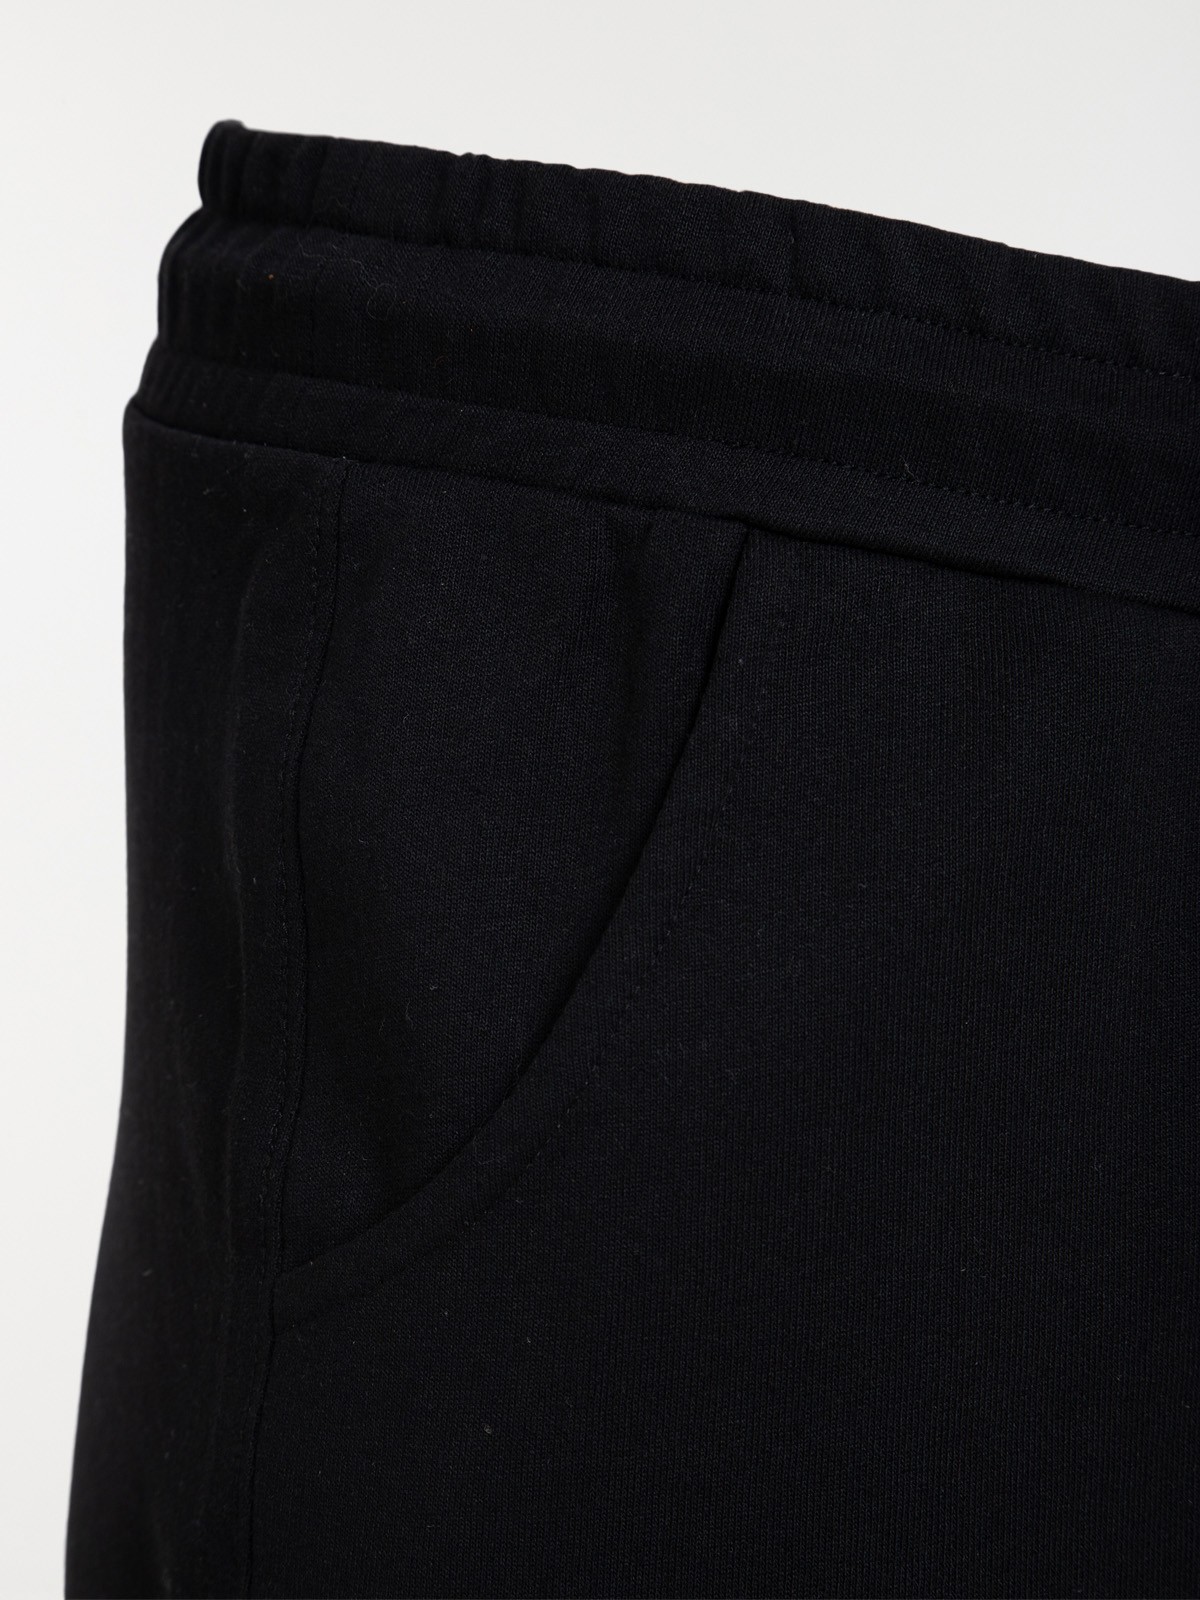 Pantalon sport noir grande taille femme - DistriCenter